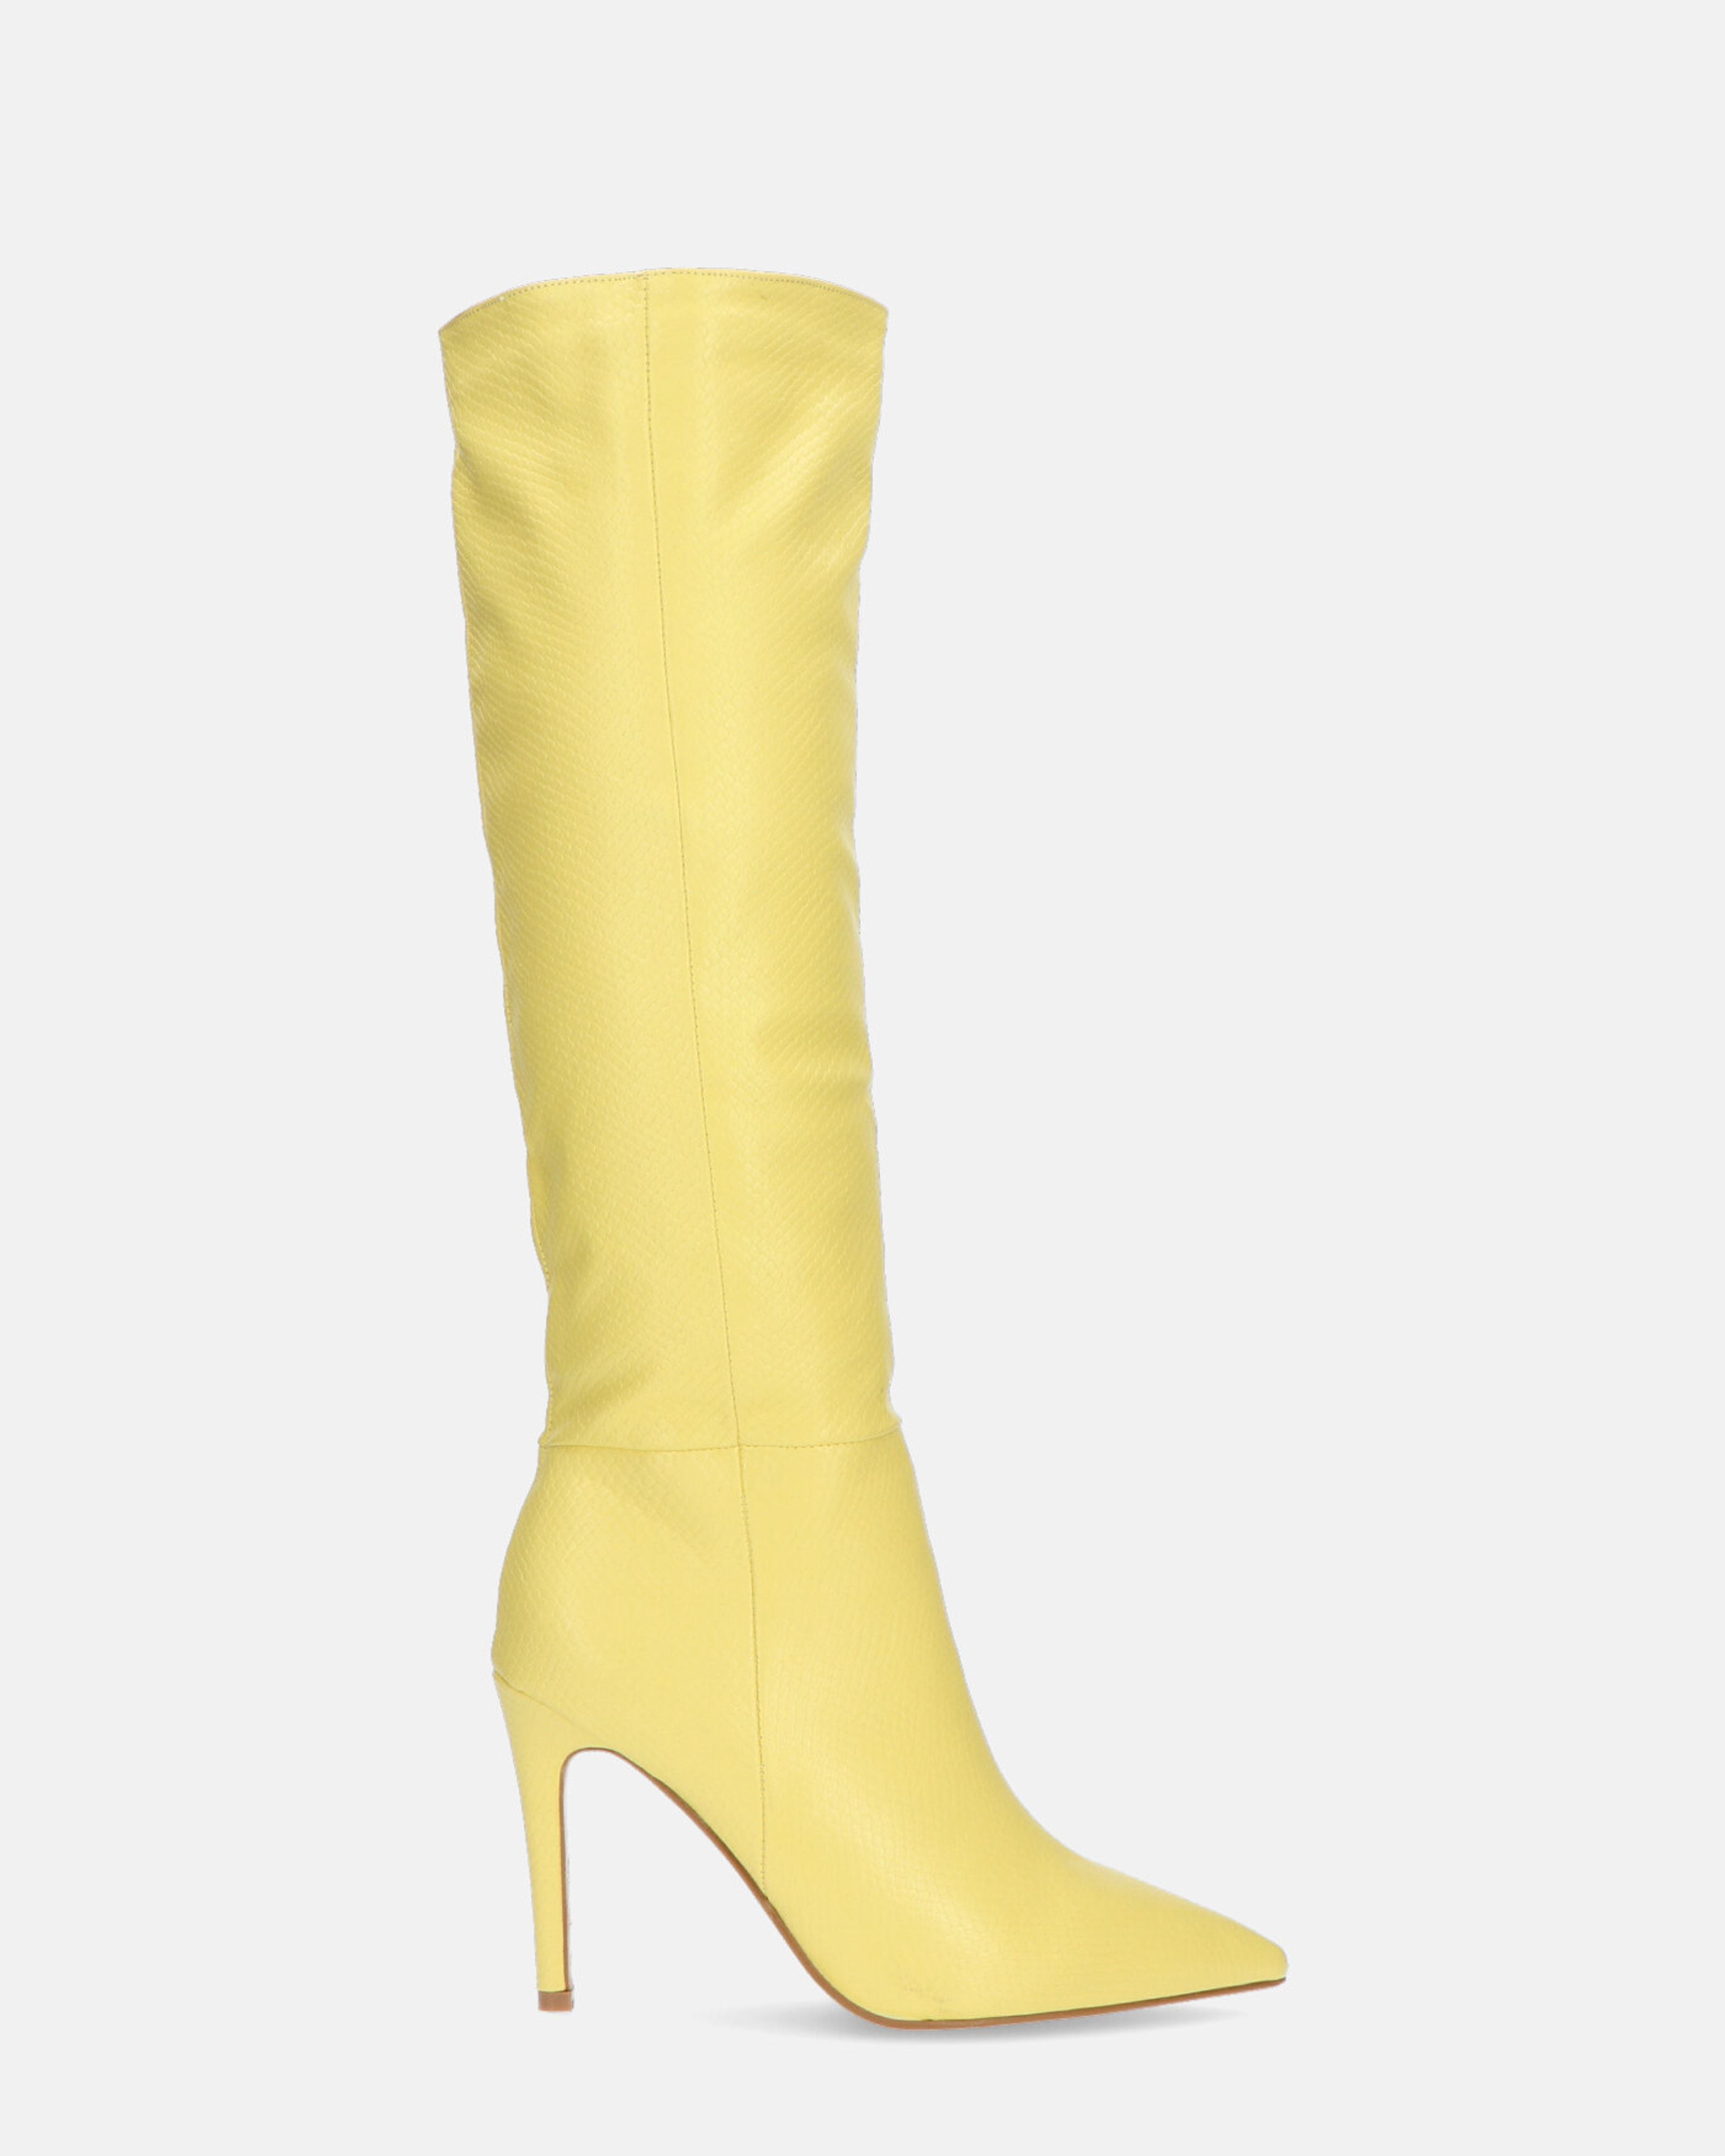 LOLY - yellow snake print heel boot